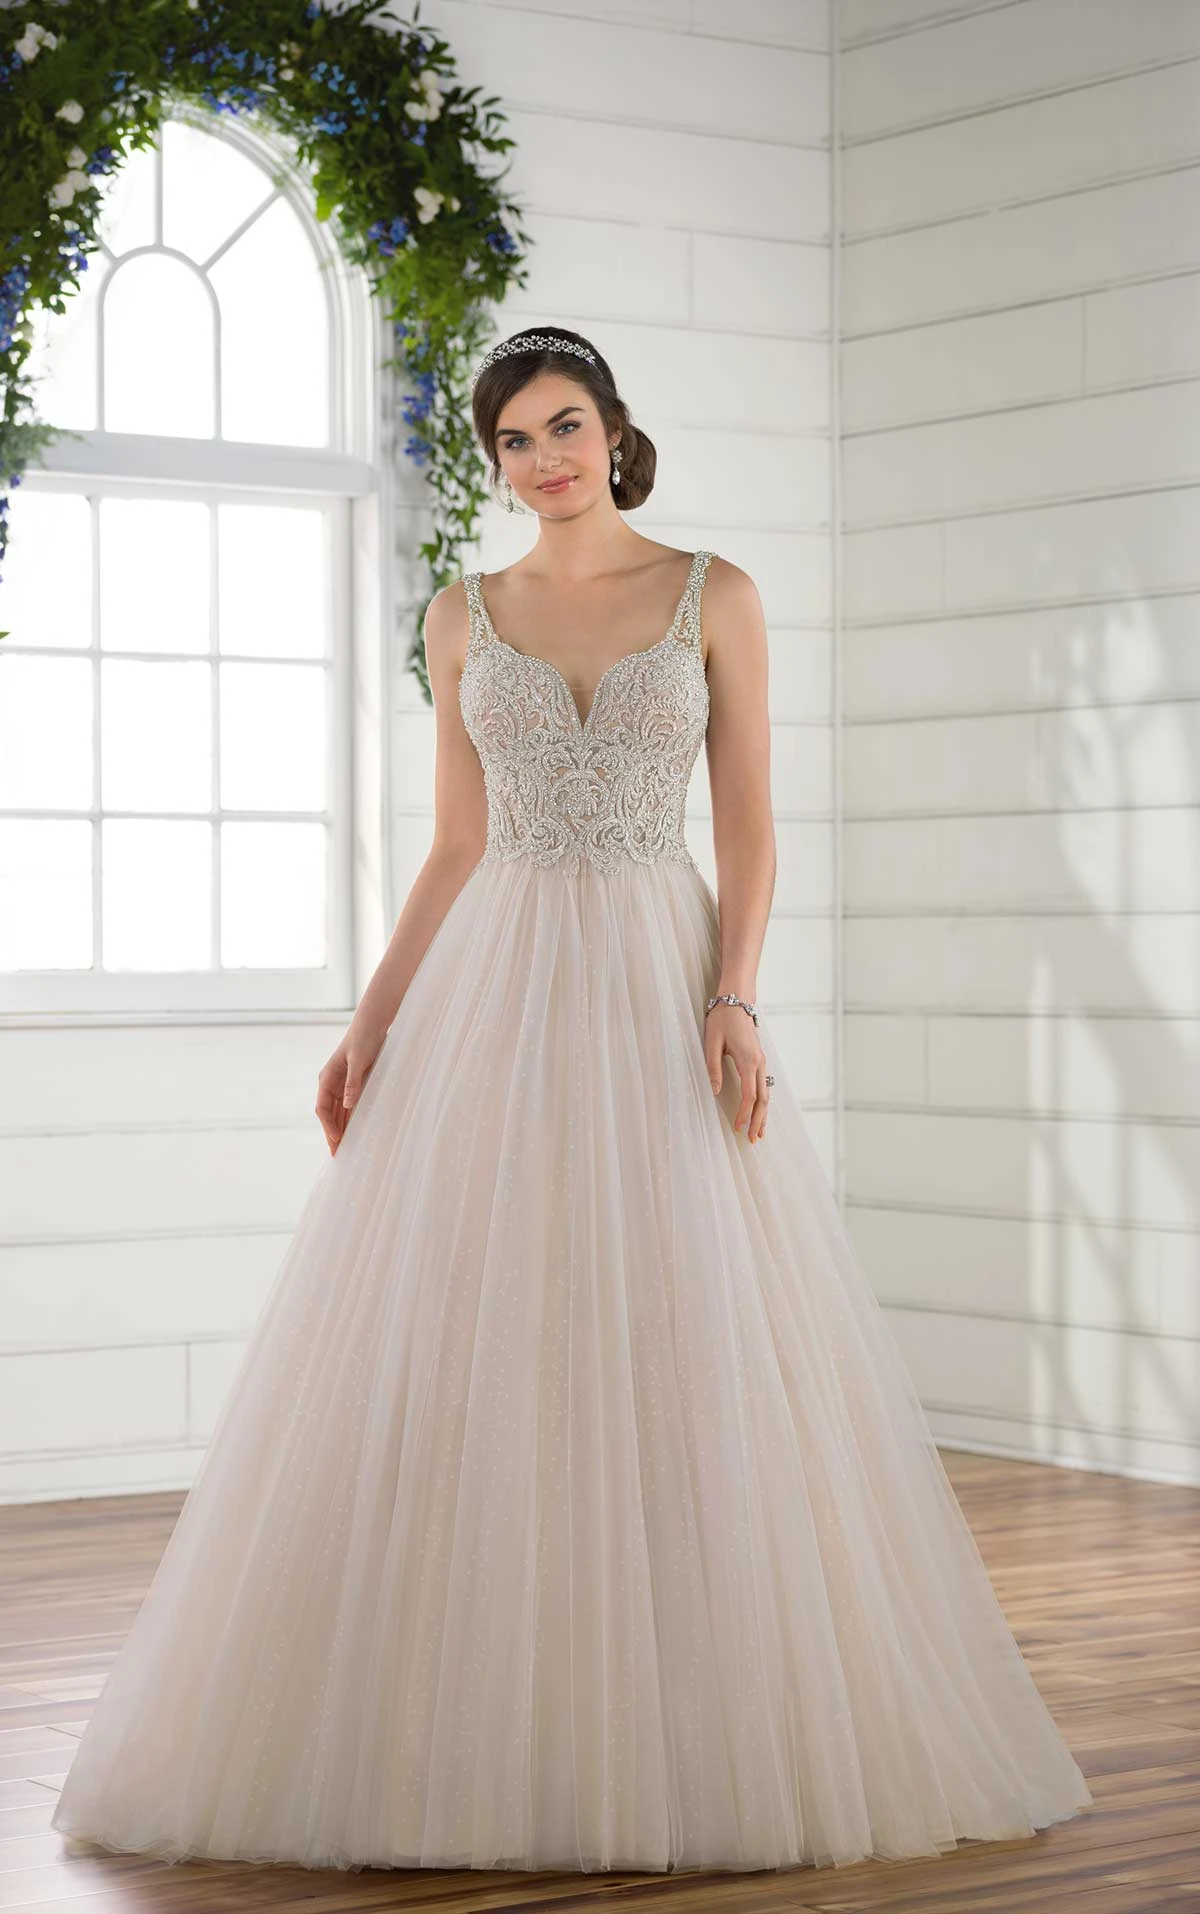 Modern Fairytale Wedding Dress | Essense of Australia ...